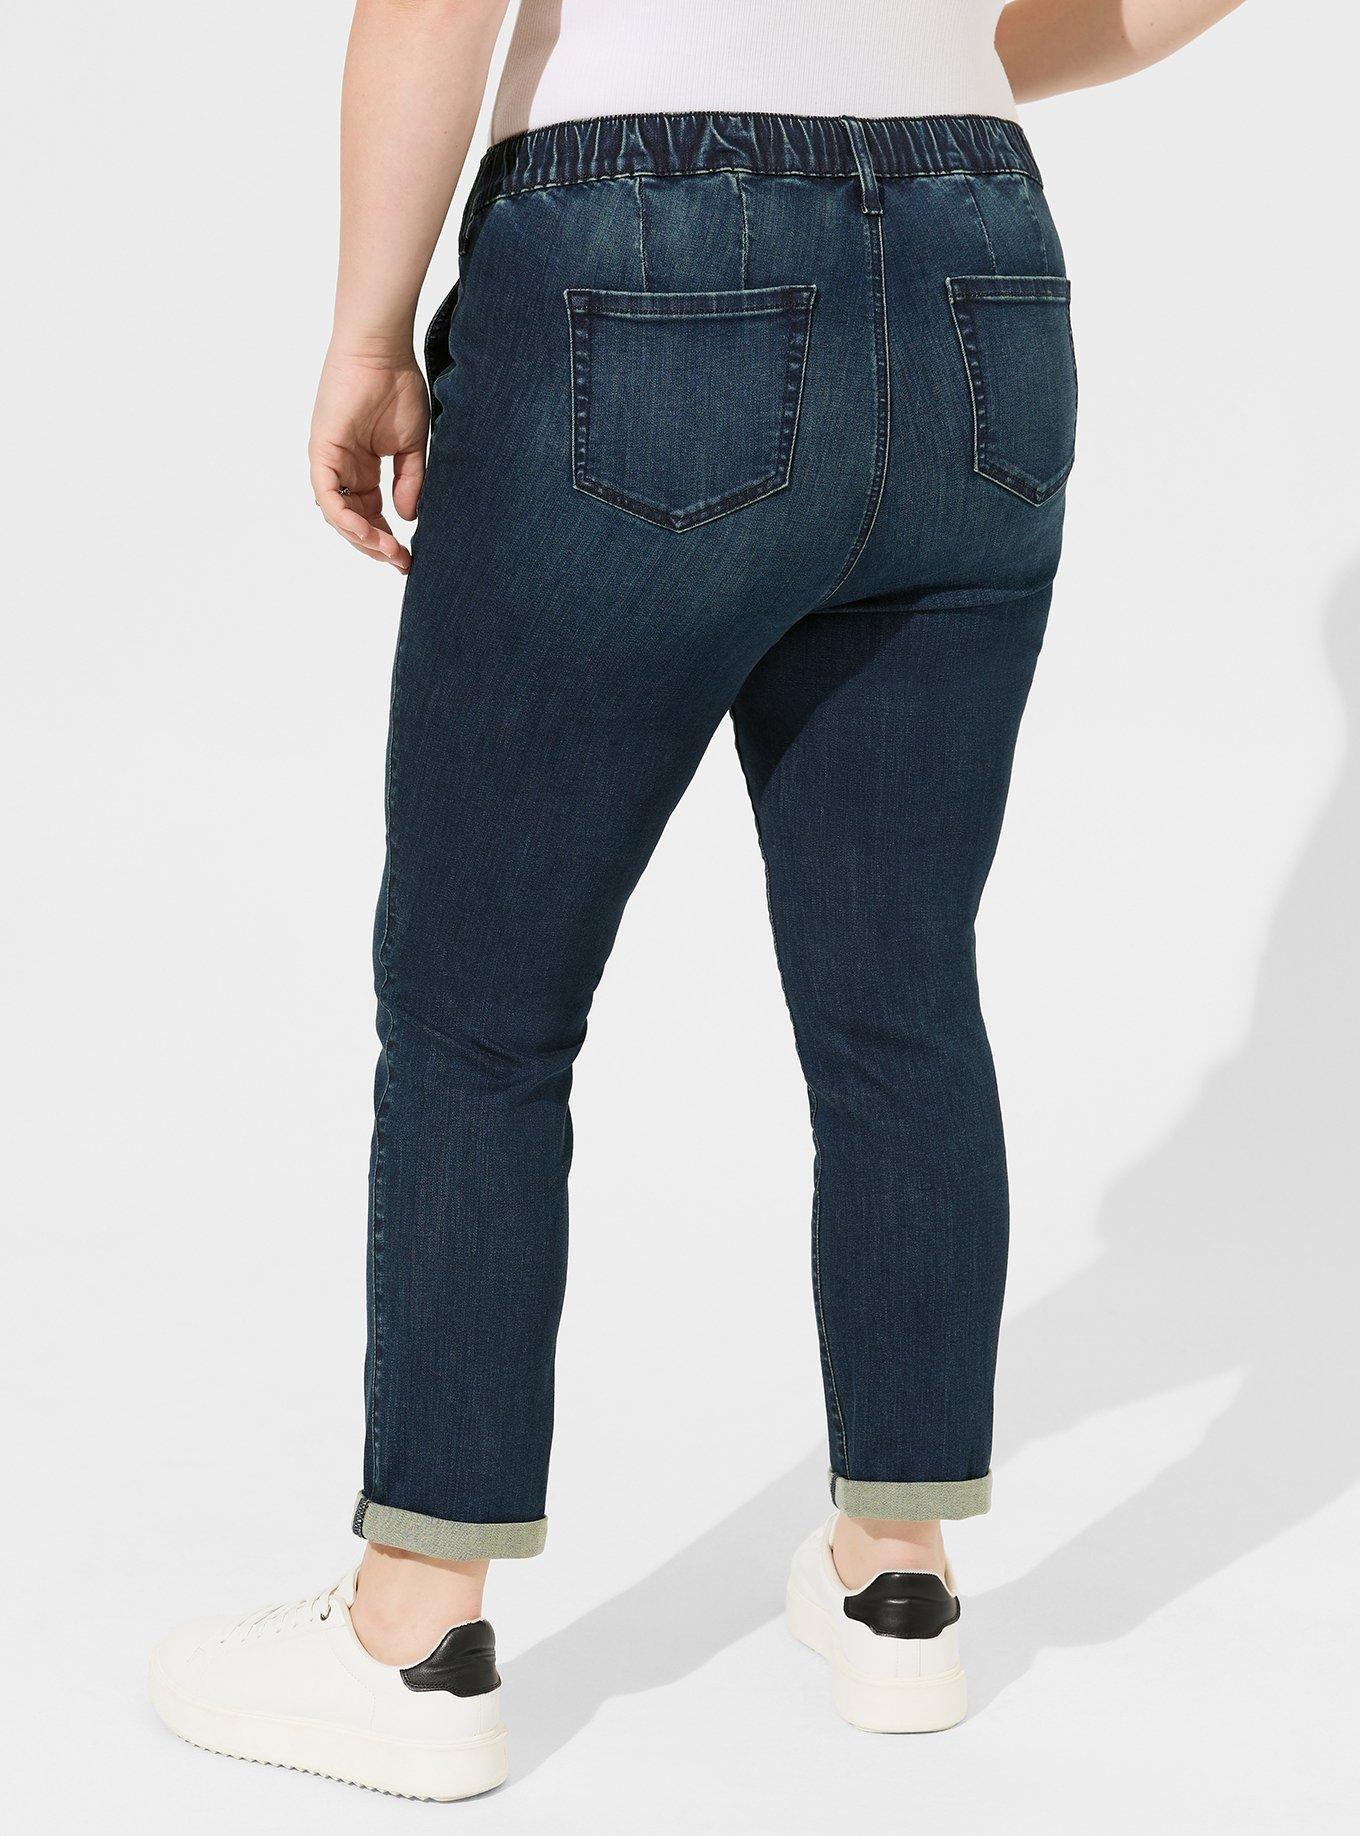 Kmart Shapewear Jeans-Black Size: 8, Price History & Comparison